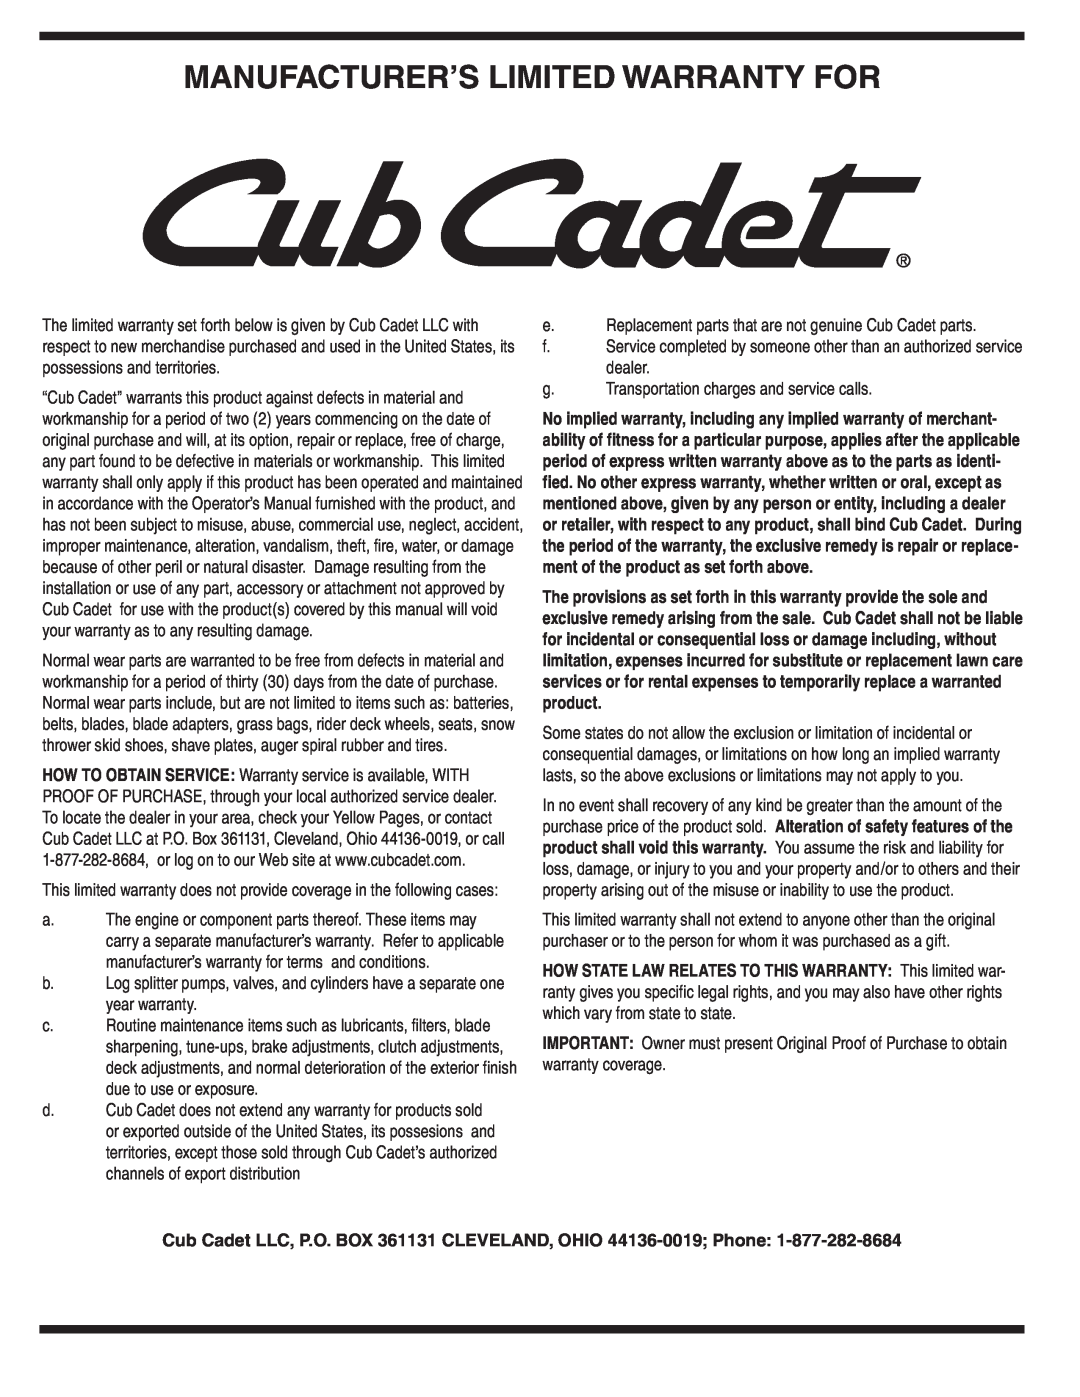 Cub Cadet 450 warranty Manufacturer’S Limited Warranty For, Cub Cadet LLC, P.O. BOX 361131 CLEVELAND, OHIO 44136-0019 Phone 